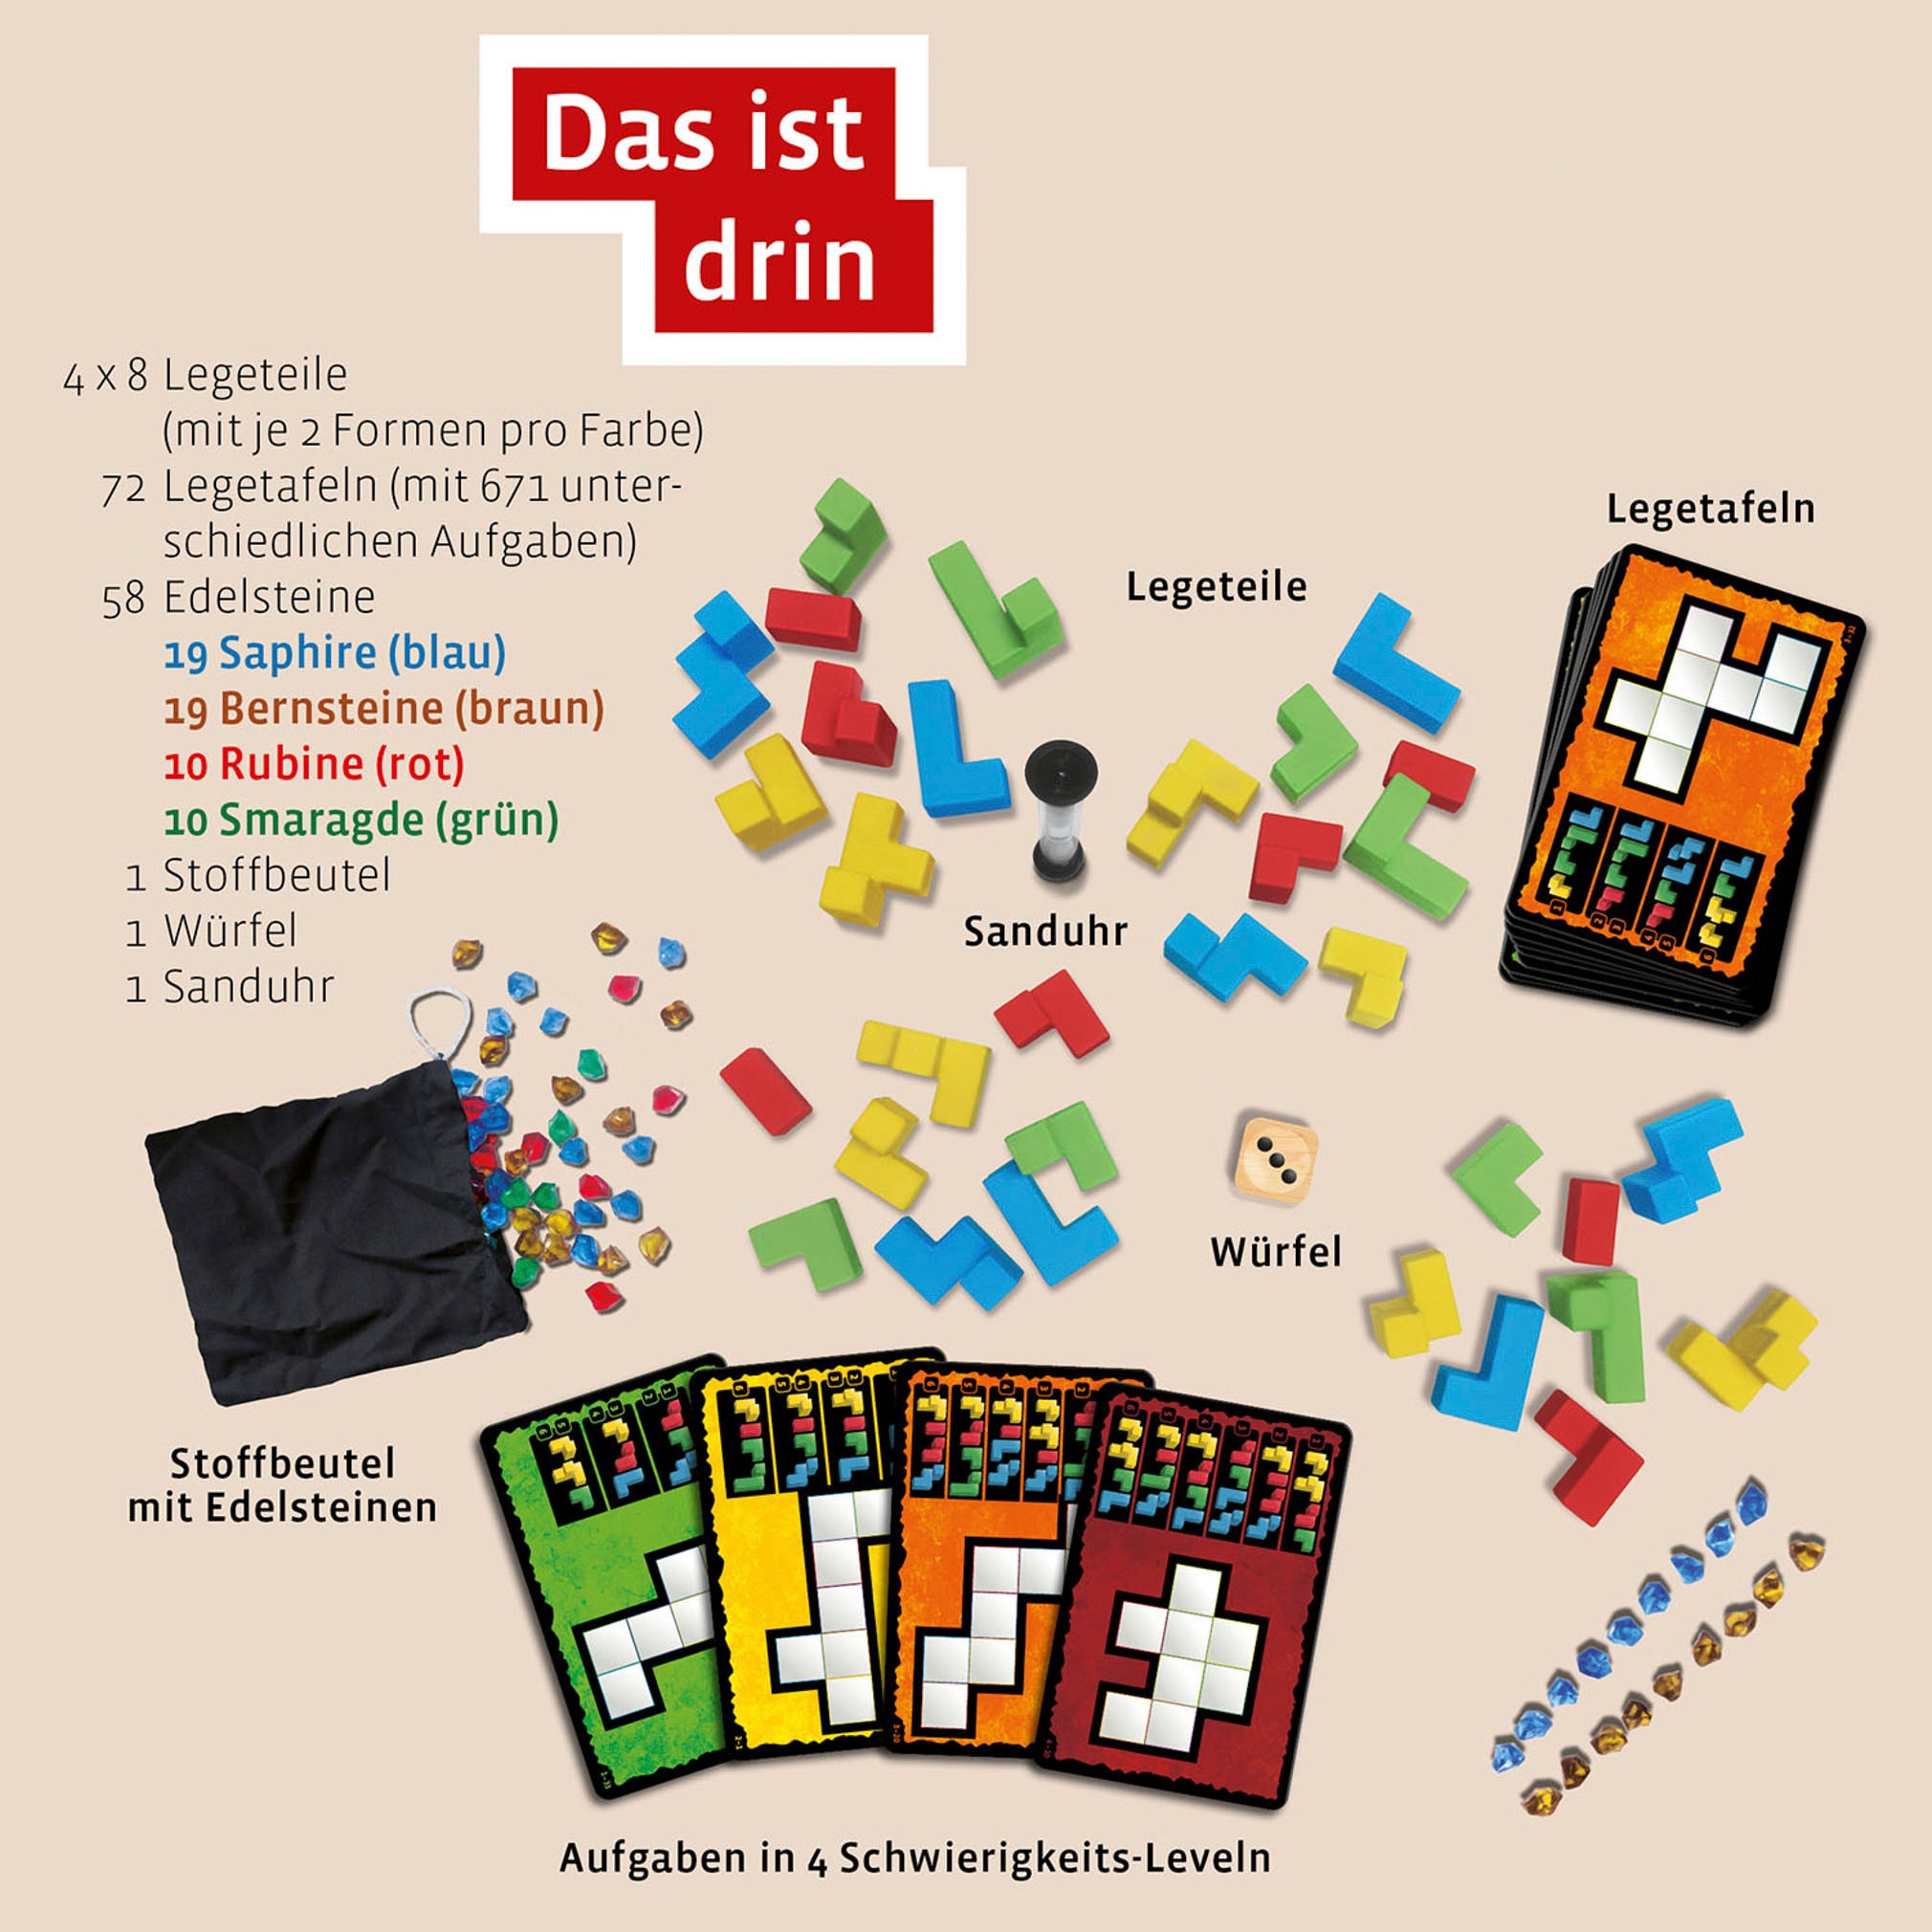 Kosmos Spiel »Ubongo! 3-D Family 2022«, Made in Germany